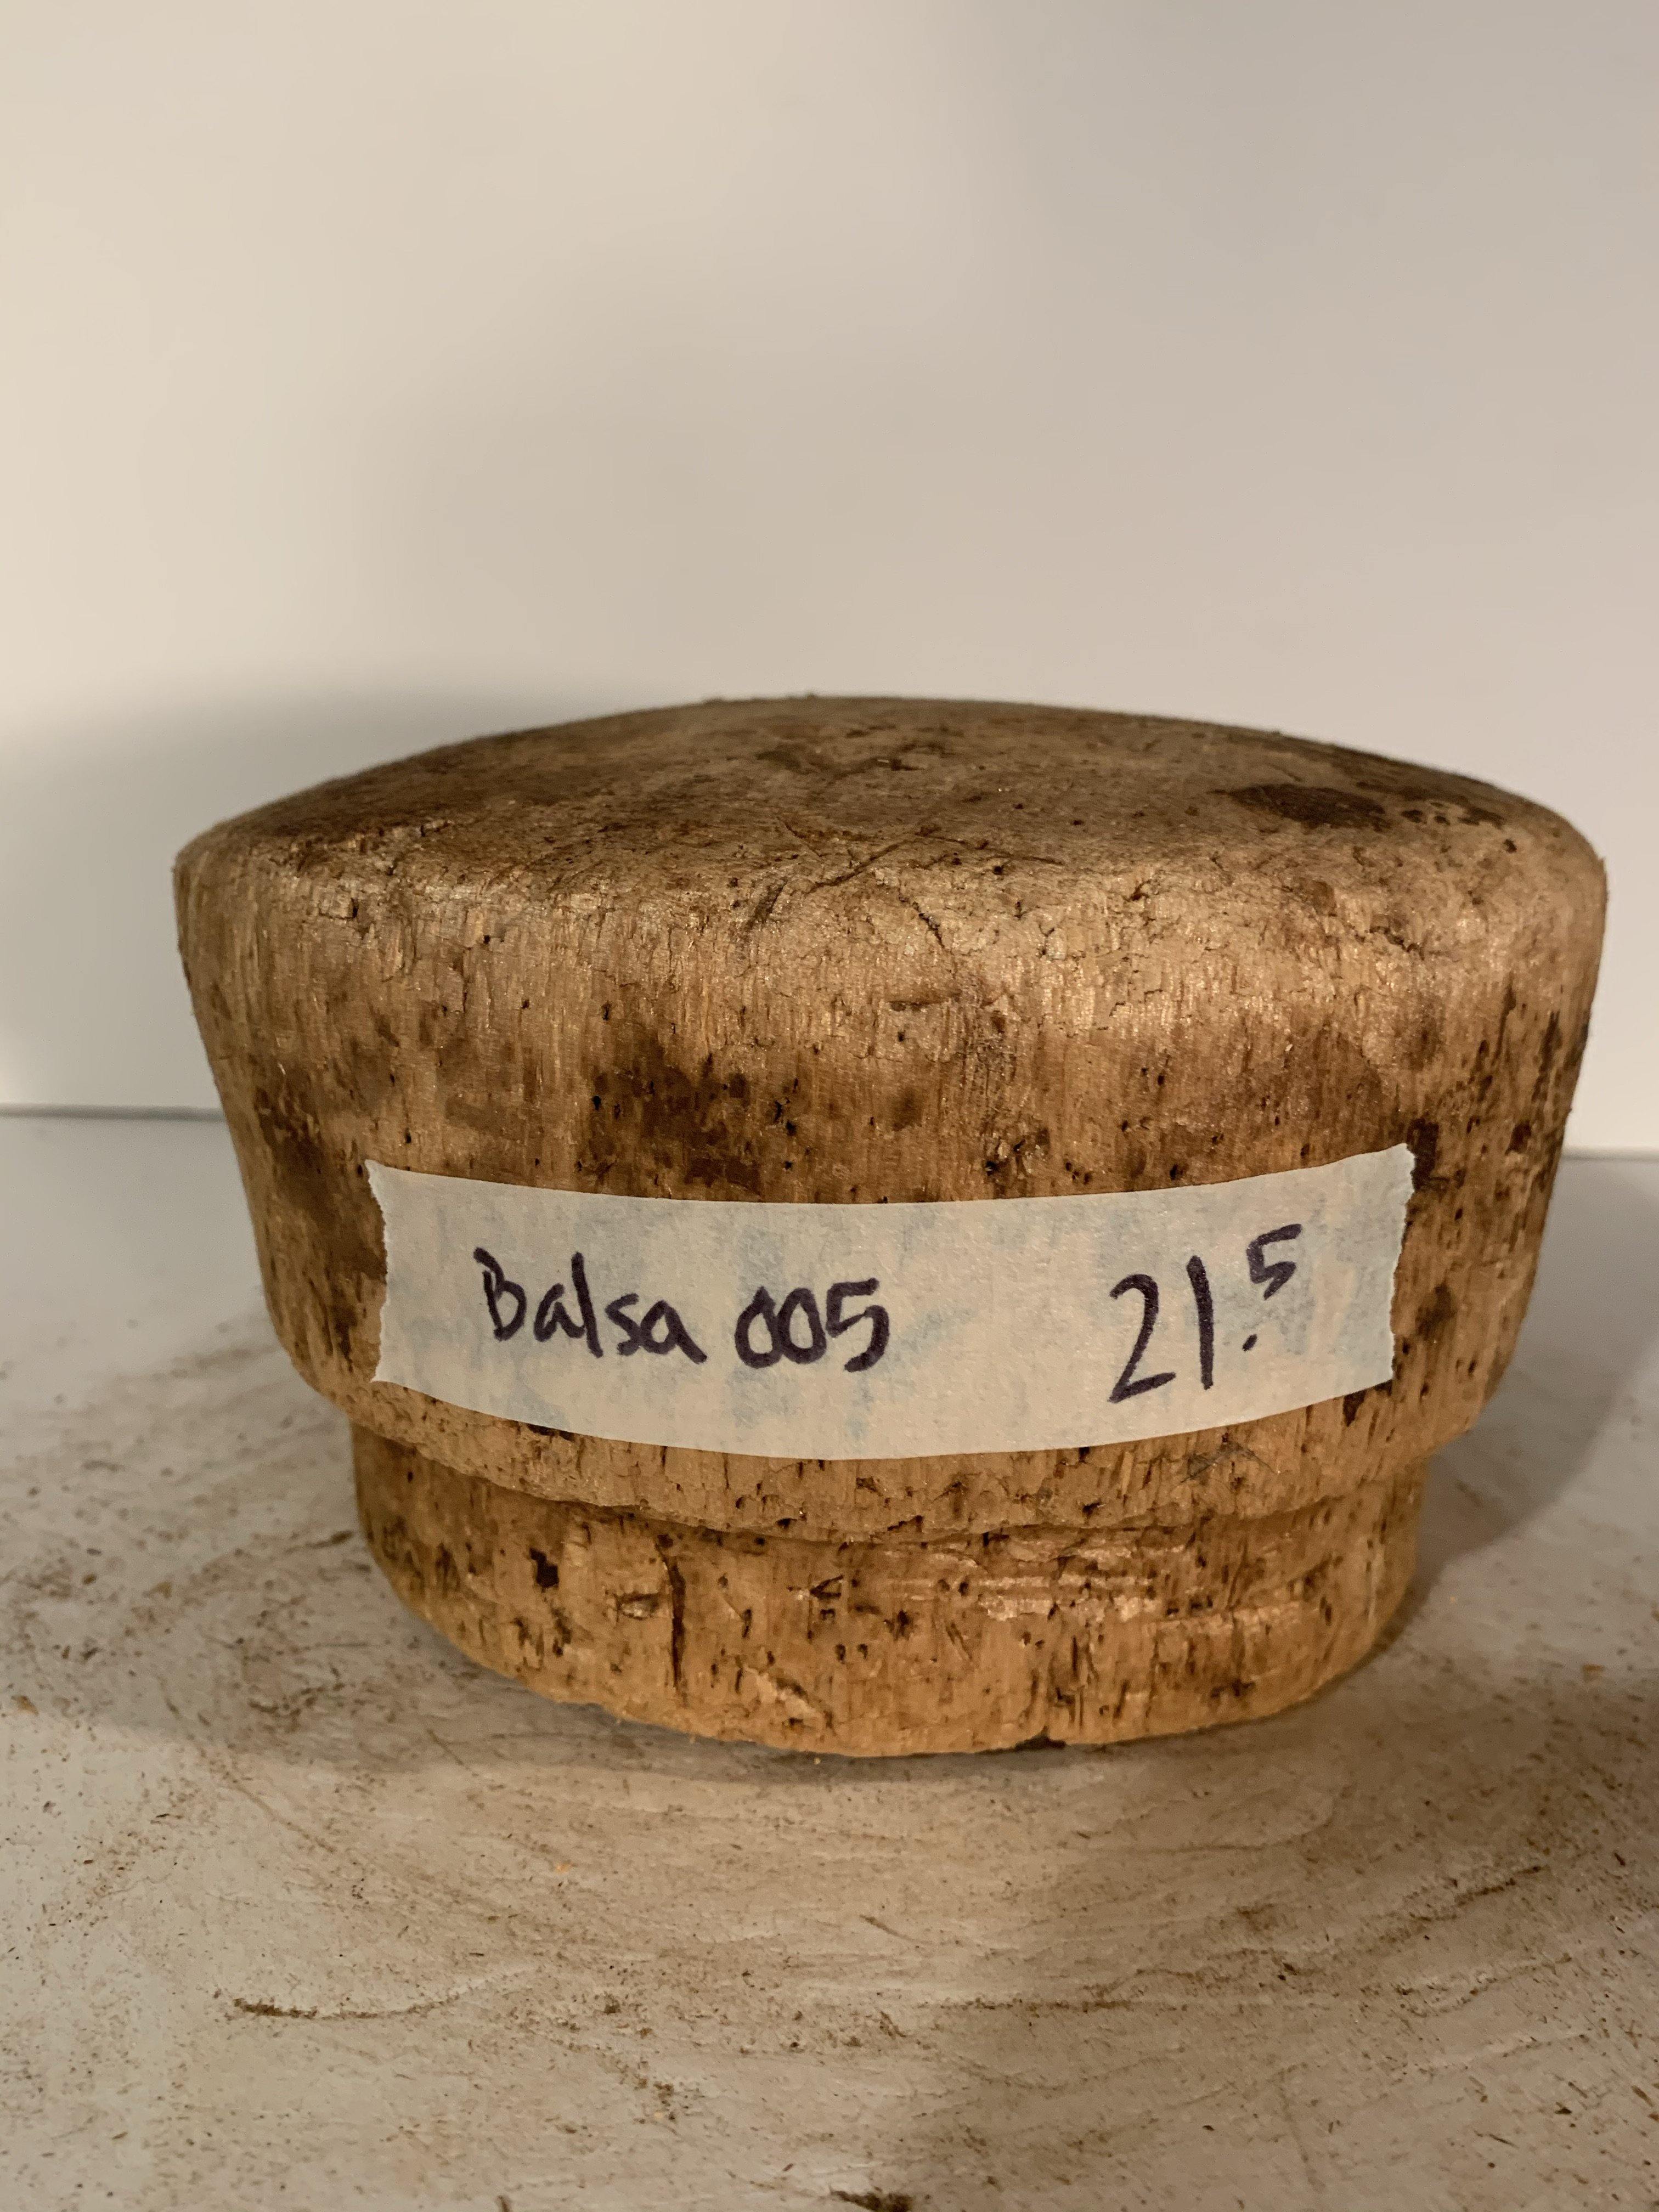 Balsa Hat Block 005, Headsize 21.5” - SoleneBoutique